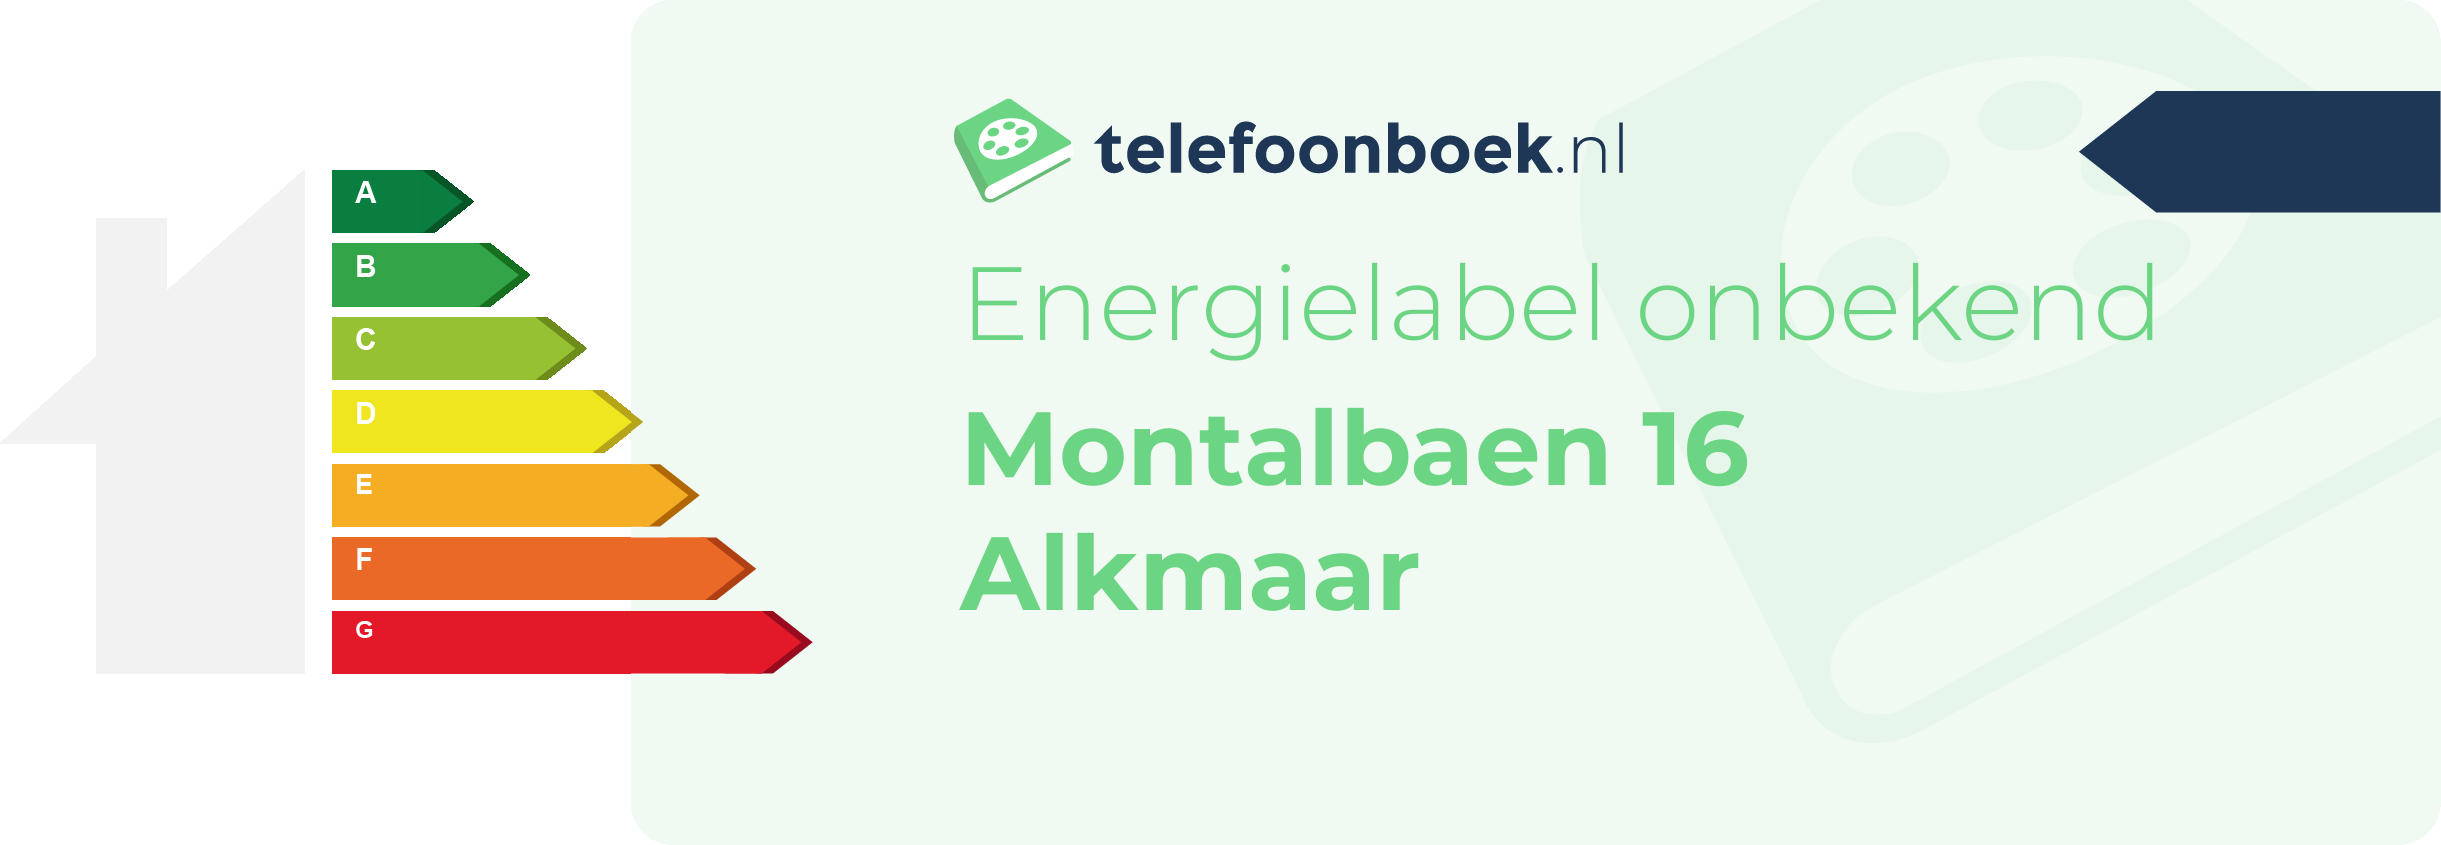 Energielabel Montalbaen 16 Alkmaar